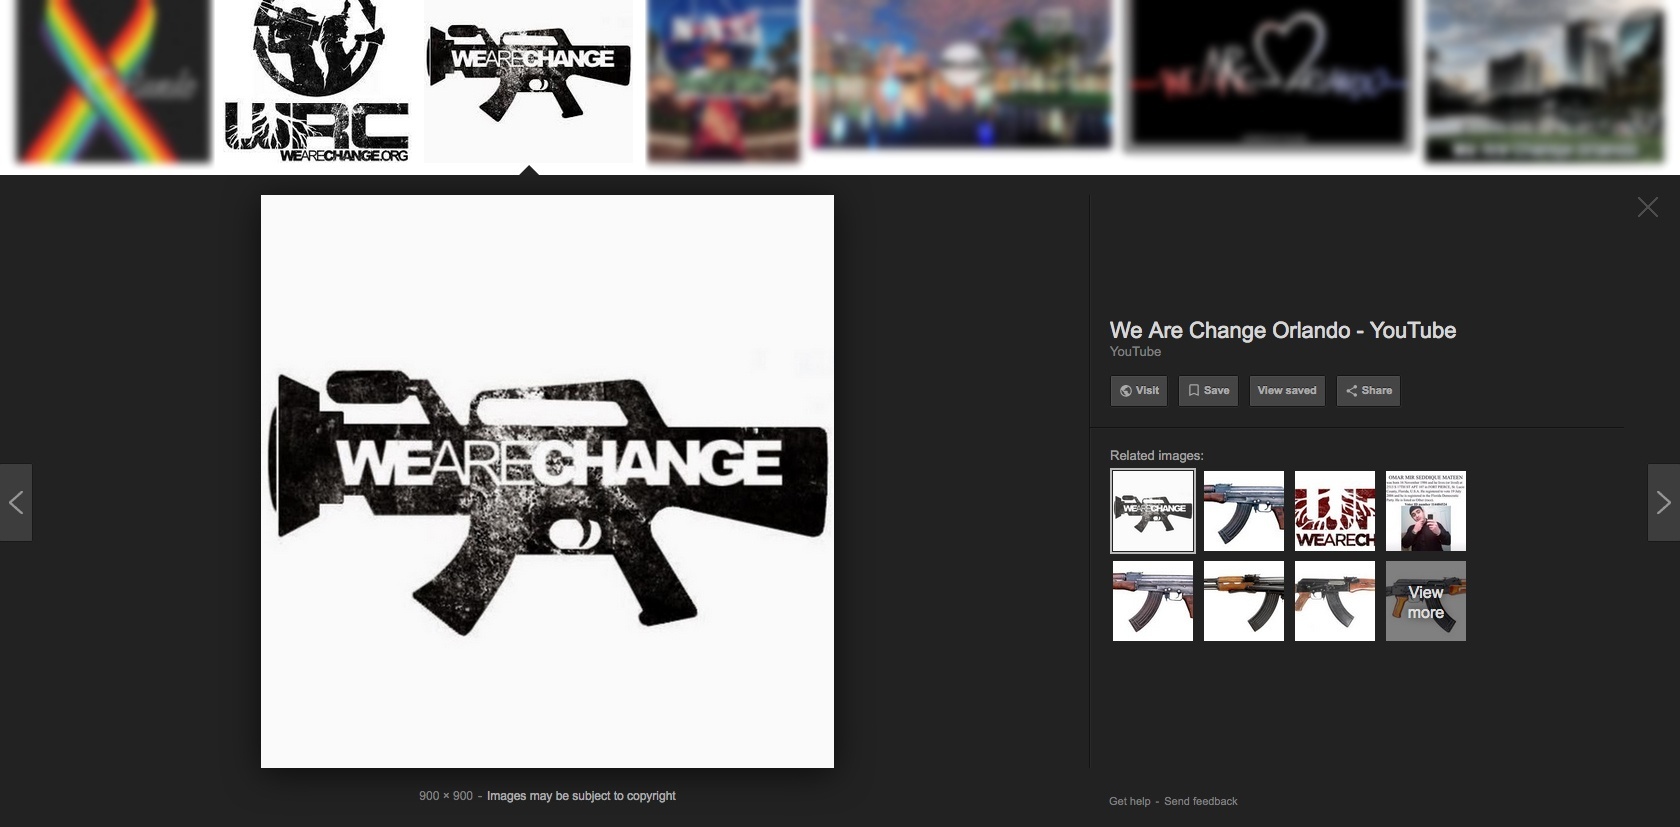 Google image results: "We Are Change - Orlando"